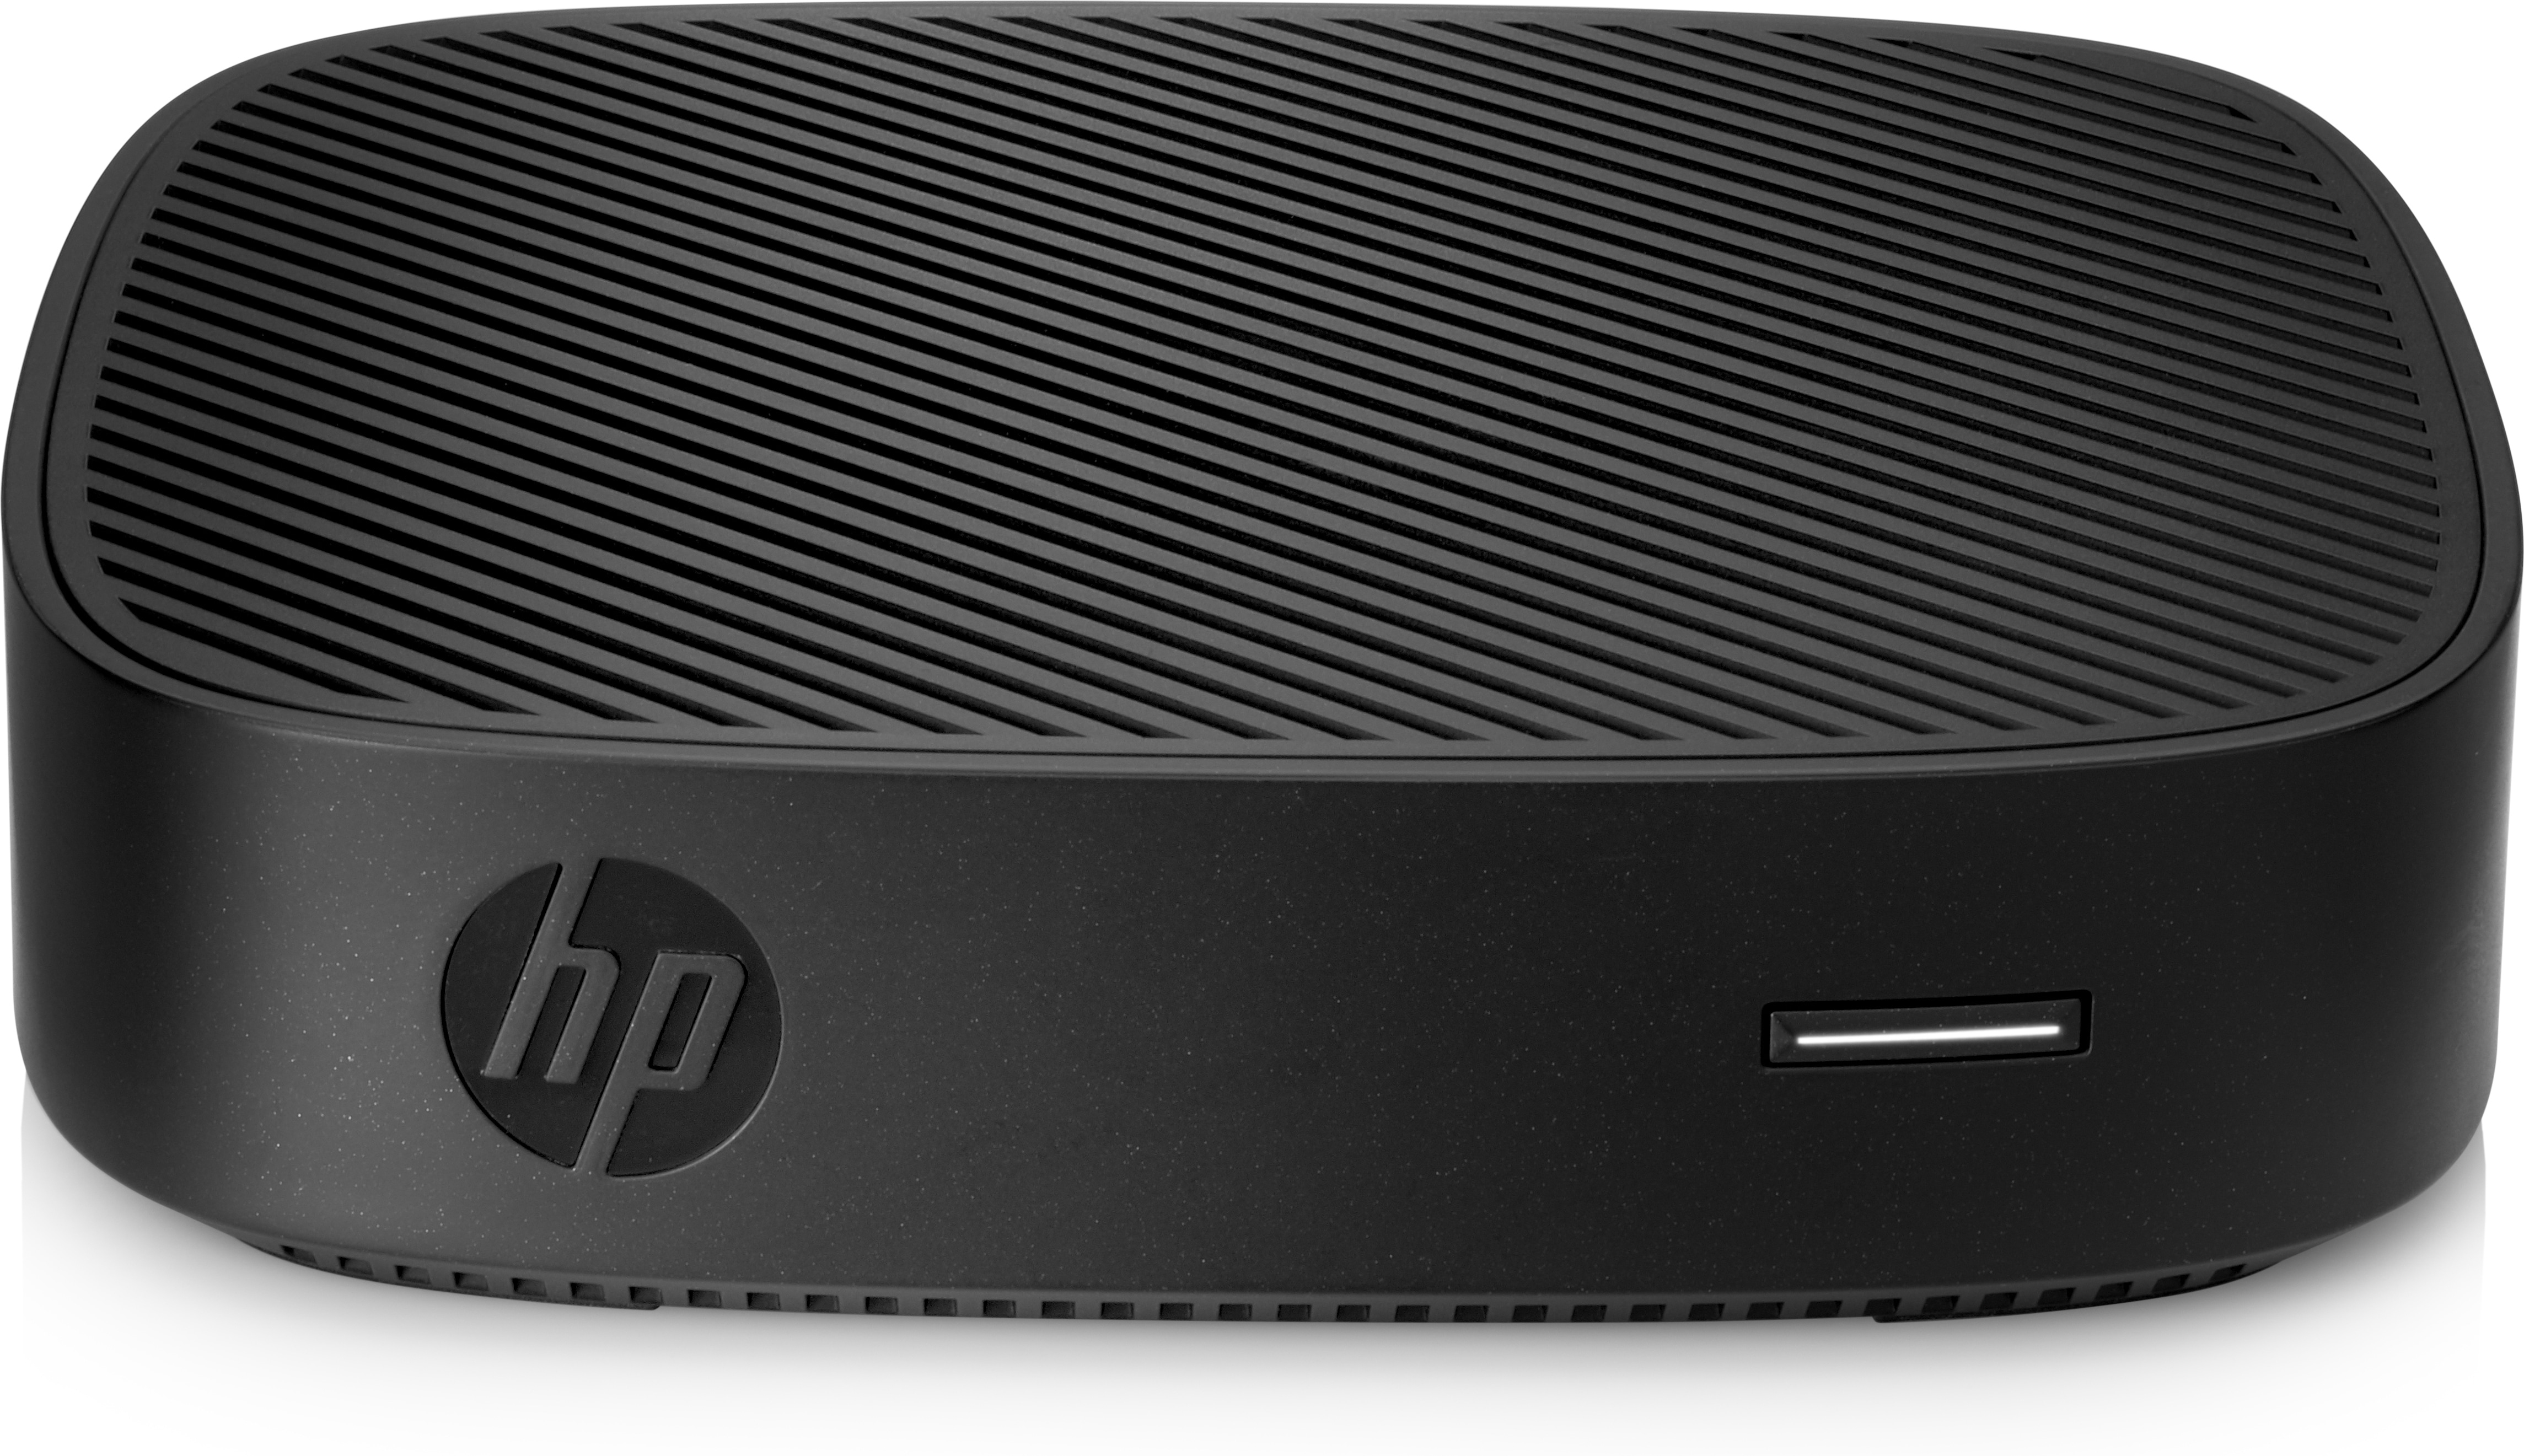 HP t430 - Thin Client - DTS - 1 x Celeron N4020 1.1 GHz - Thin Client - Celeron